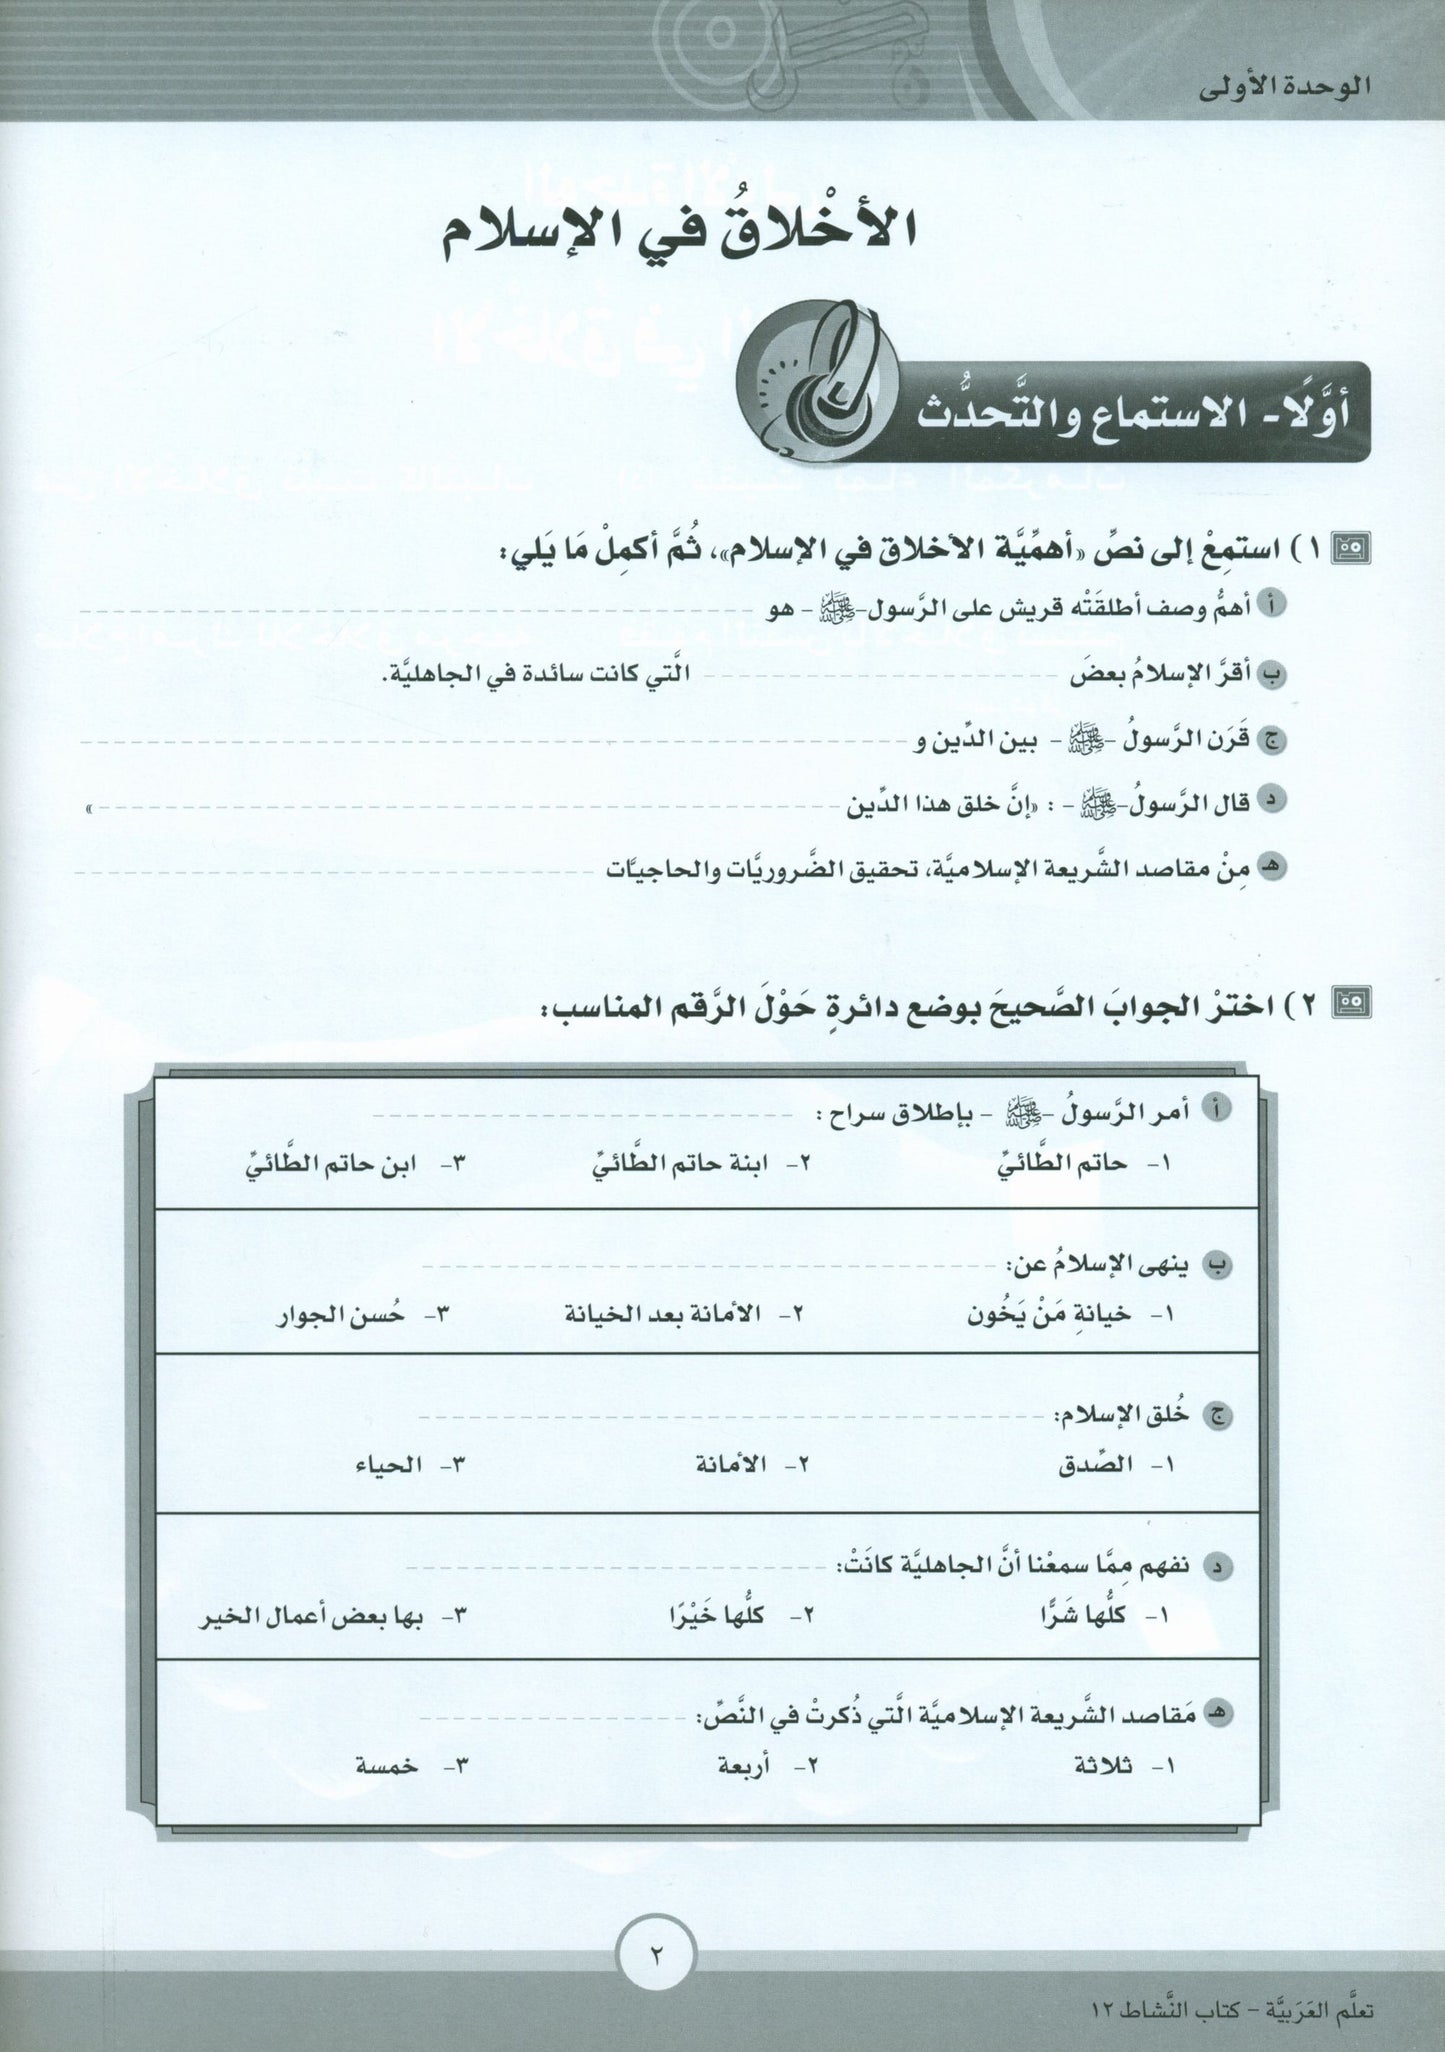 ICO Learn Arabic - Workbook - Level 12 Part 1 - تعلم العربية كتاب النشاط